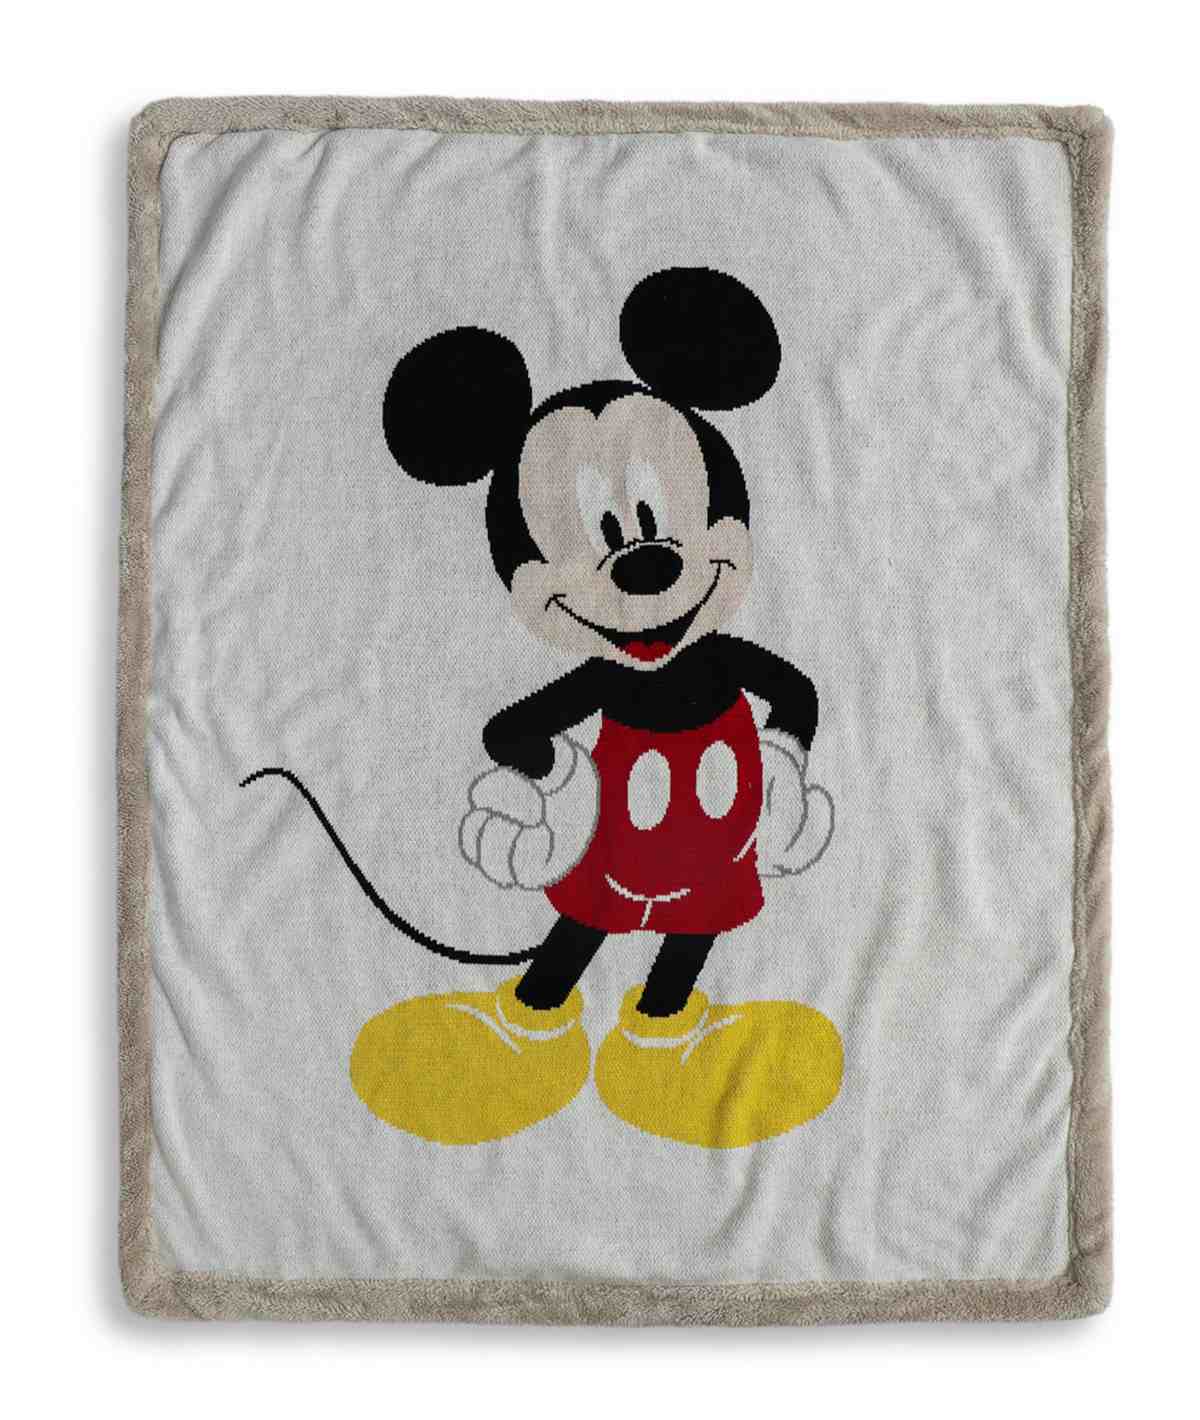 Disney mickey mouse blanket